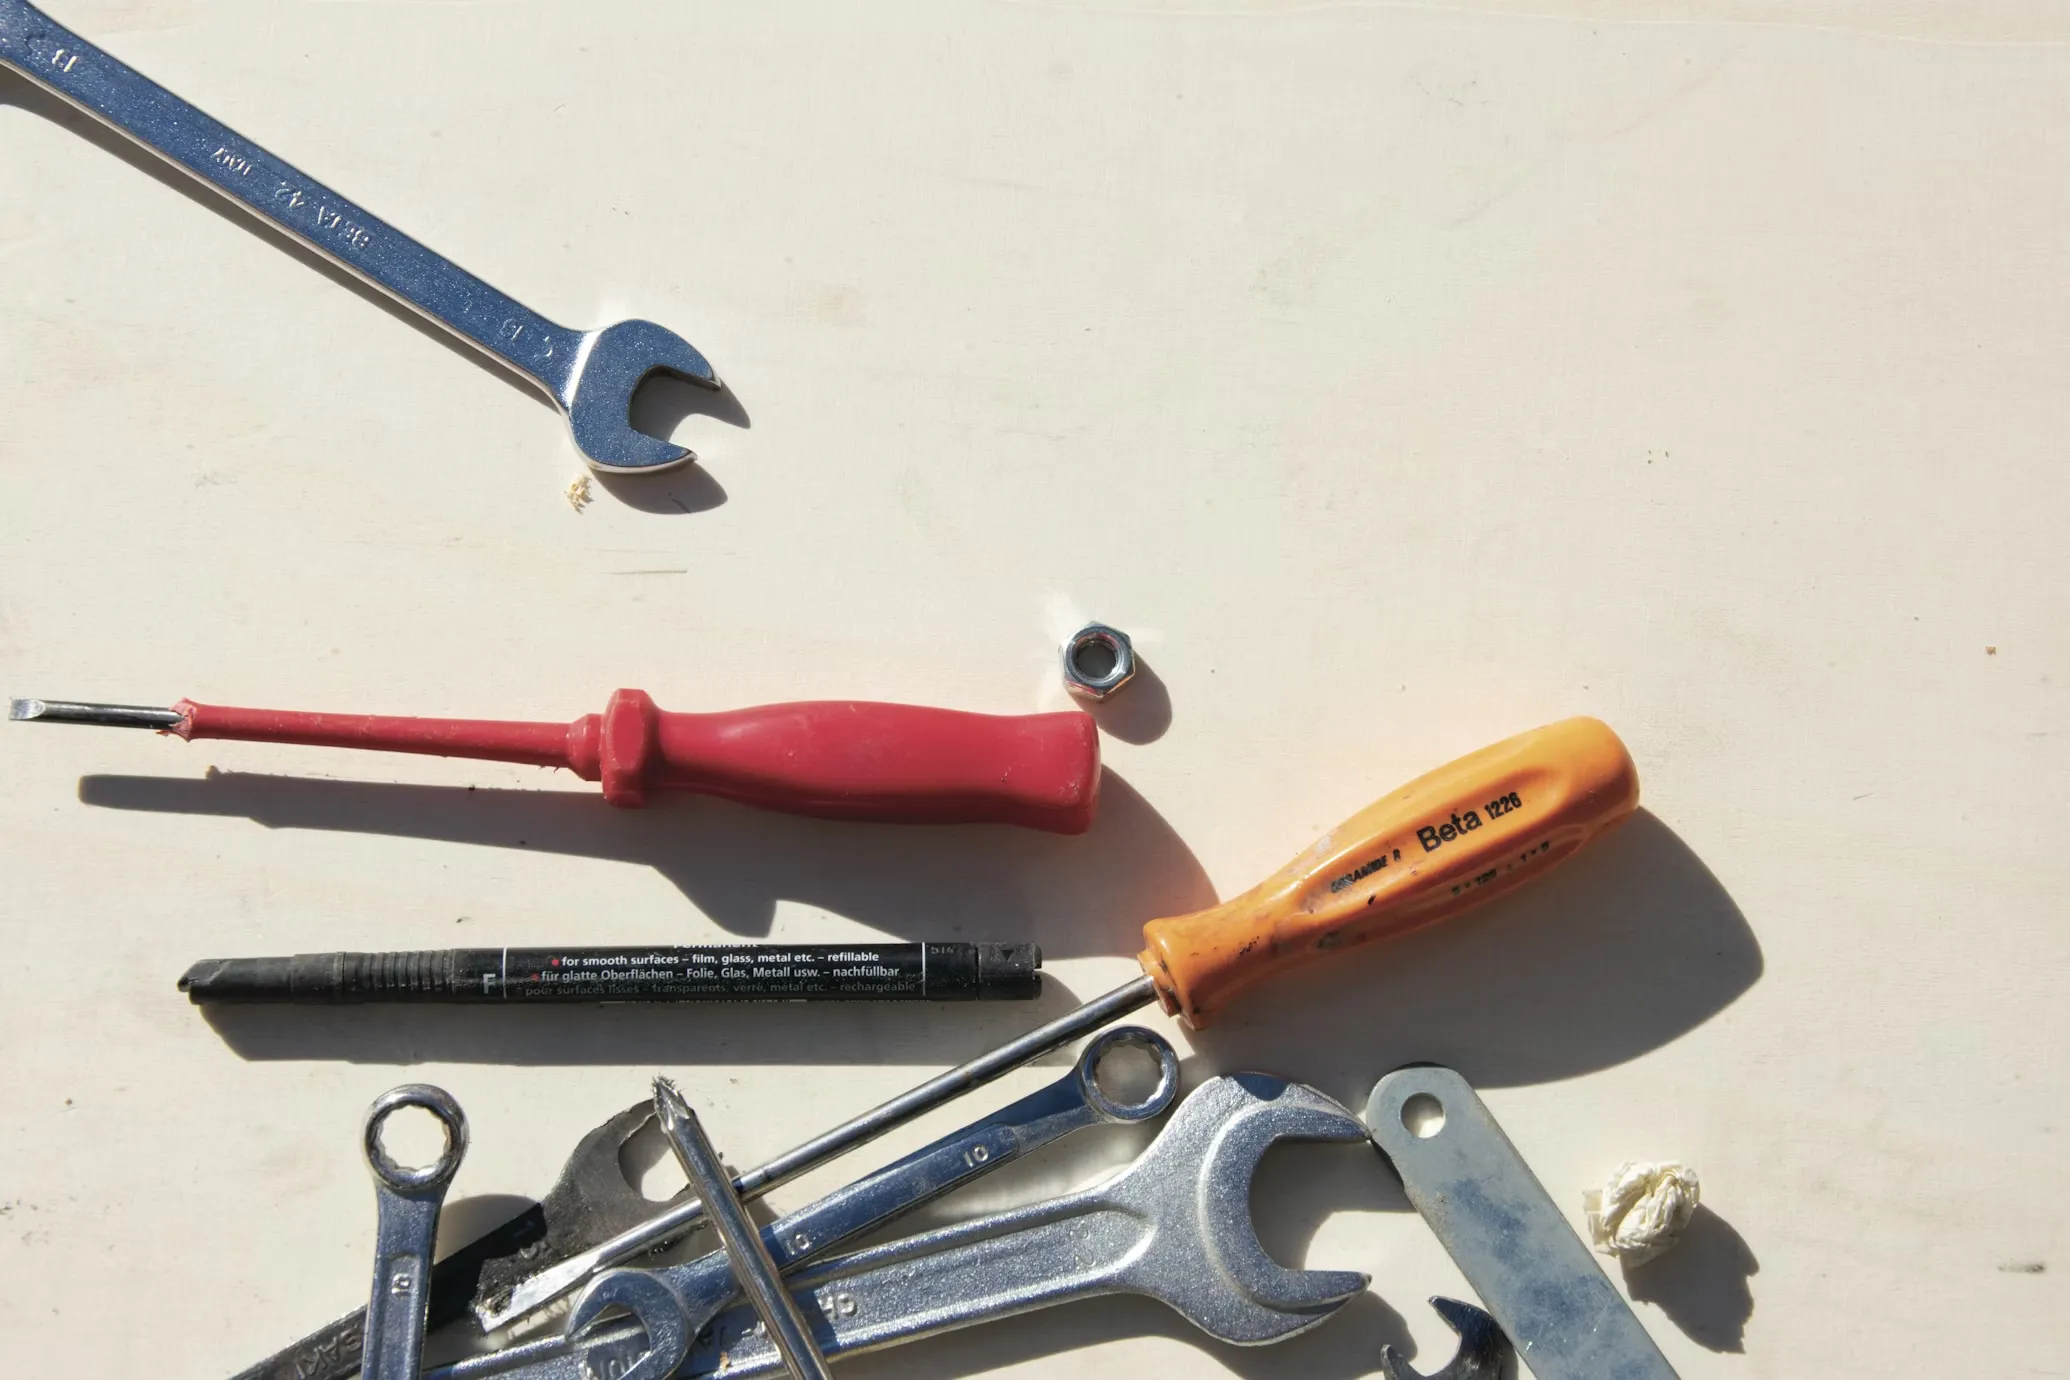 9. Multi-Tool for Board Maintenance